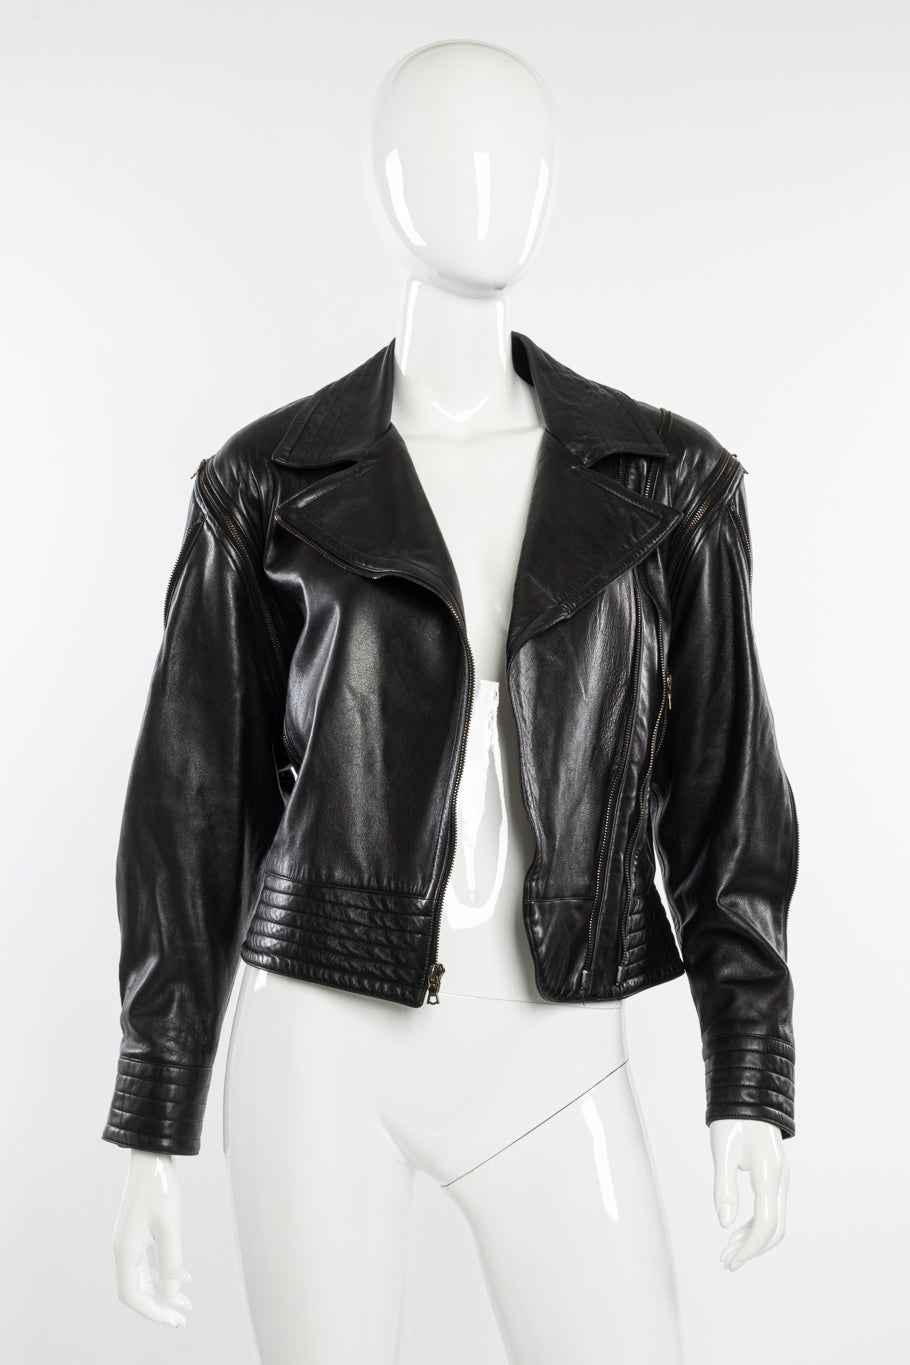 Vintage John Michael Convertible Leather Moto Jacket front on mannequin open @recessla